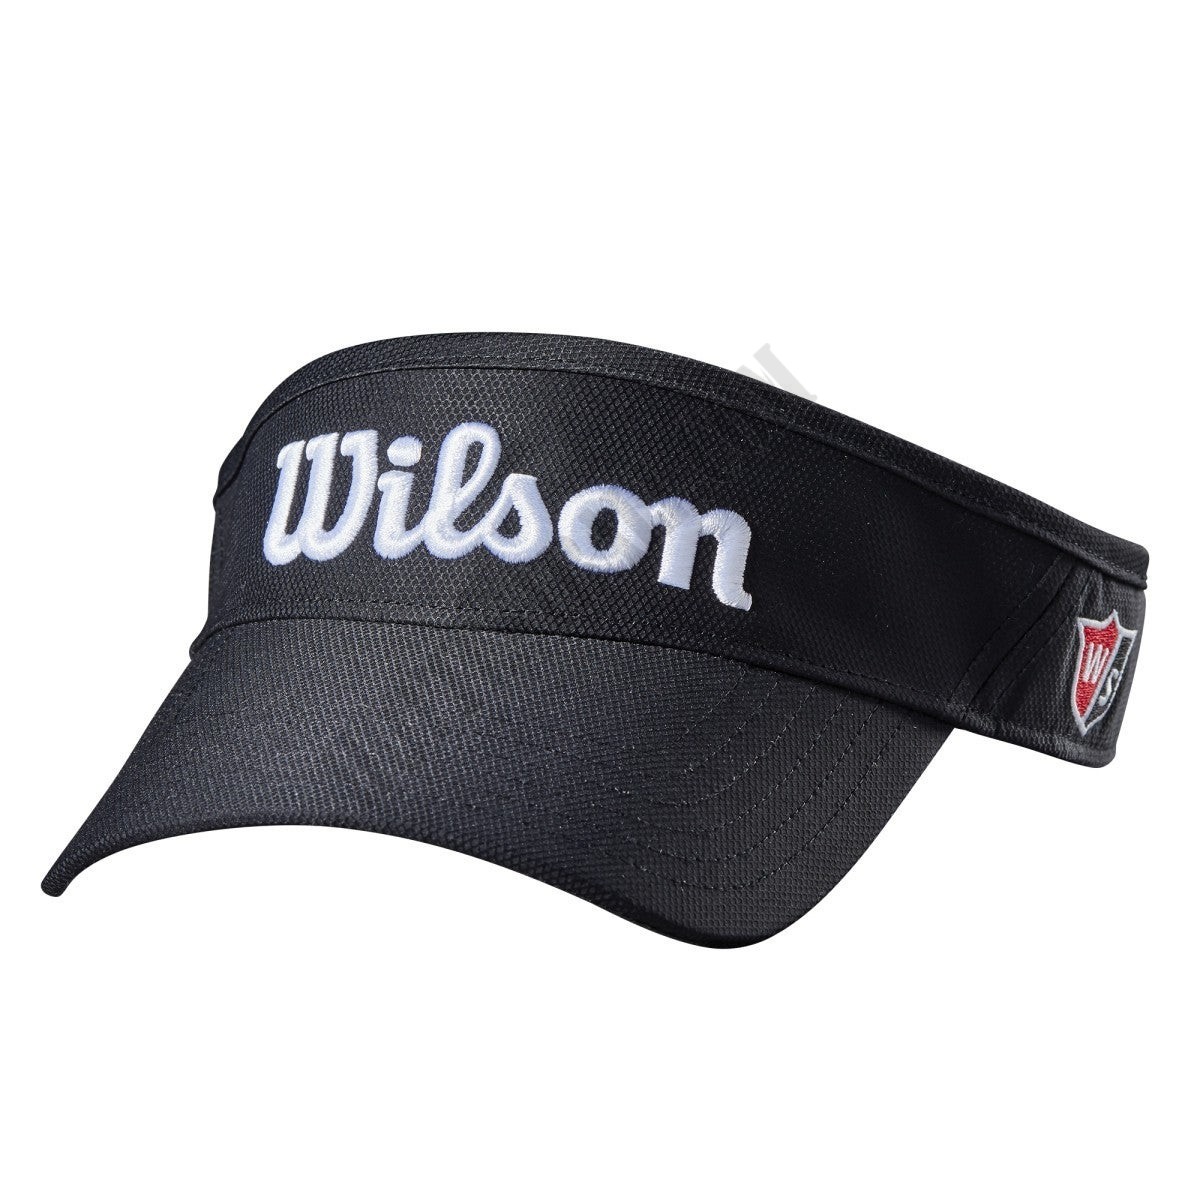 Wilson Visor - Wilson Discount Store - Wilson Visor - Wilson Discount Store